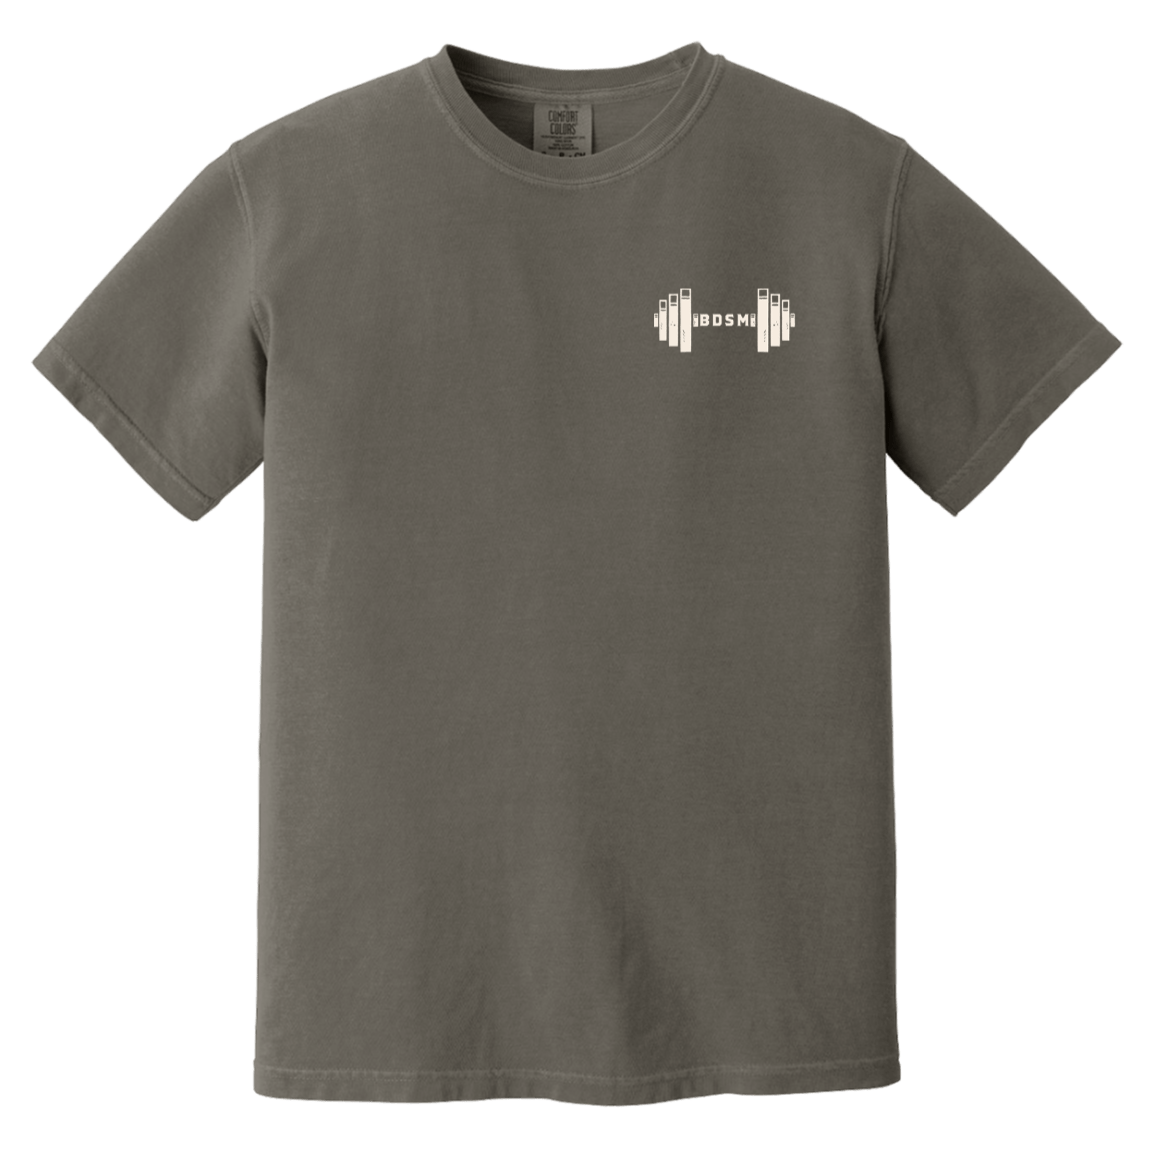 BDSM Heavyweight Gym Tee - T-Shirts